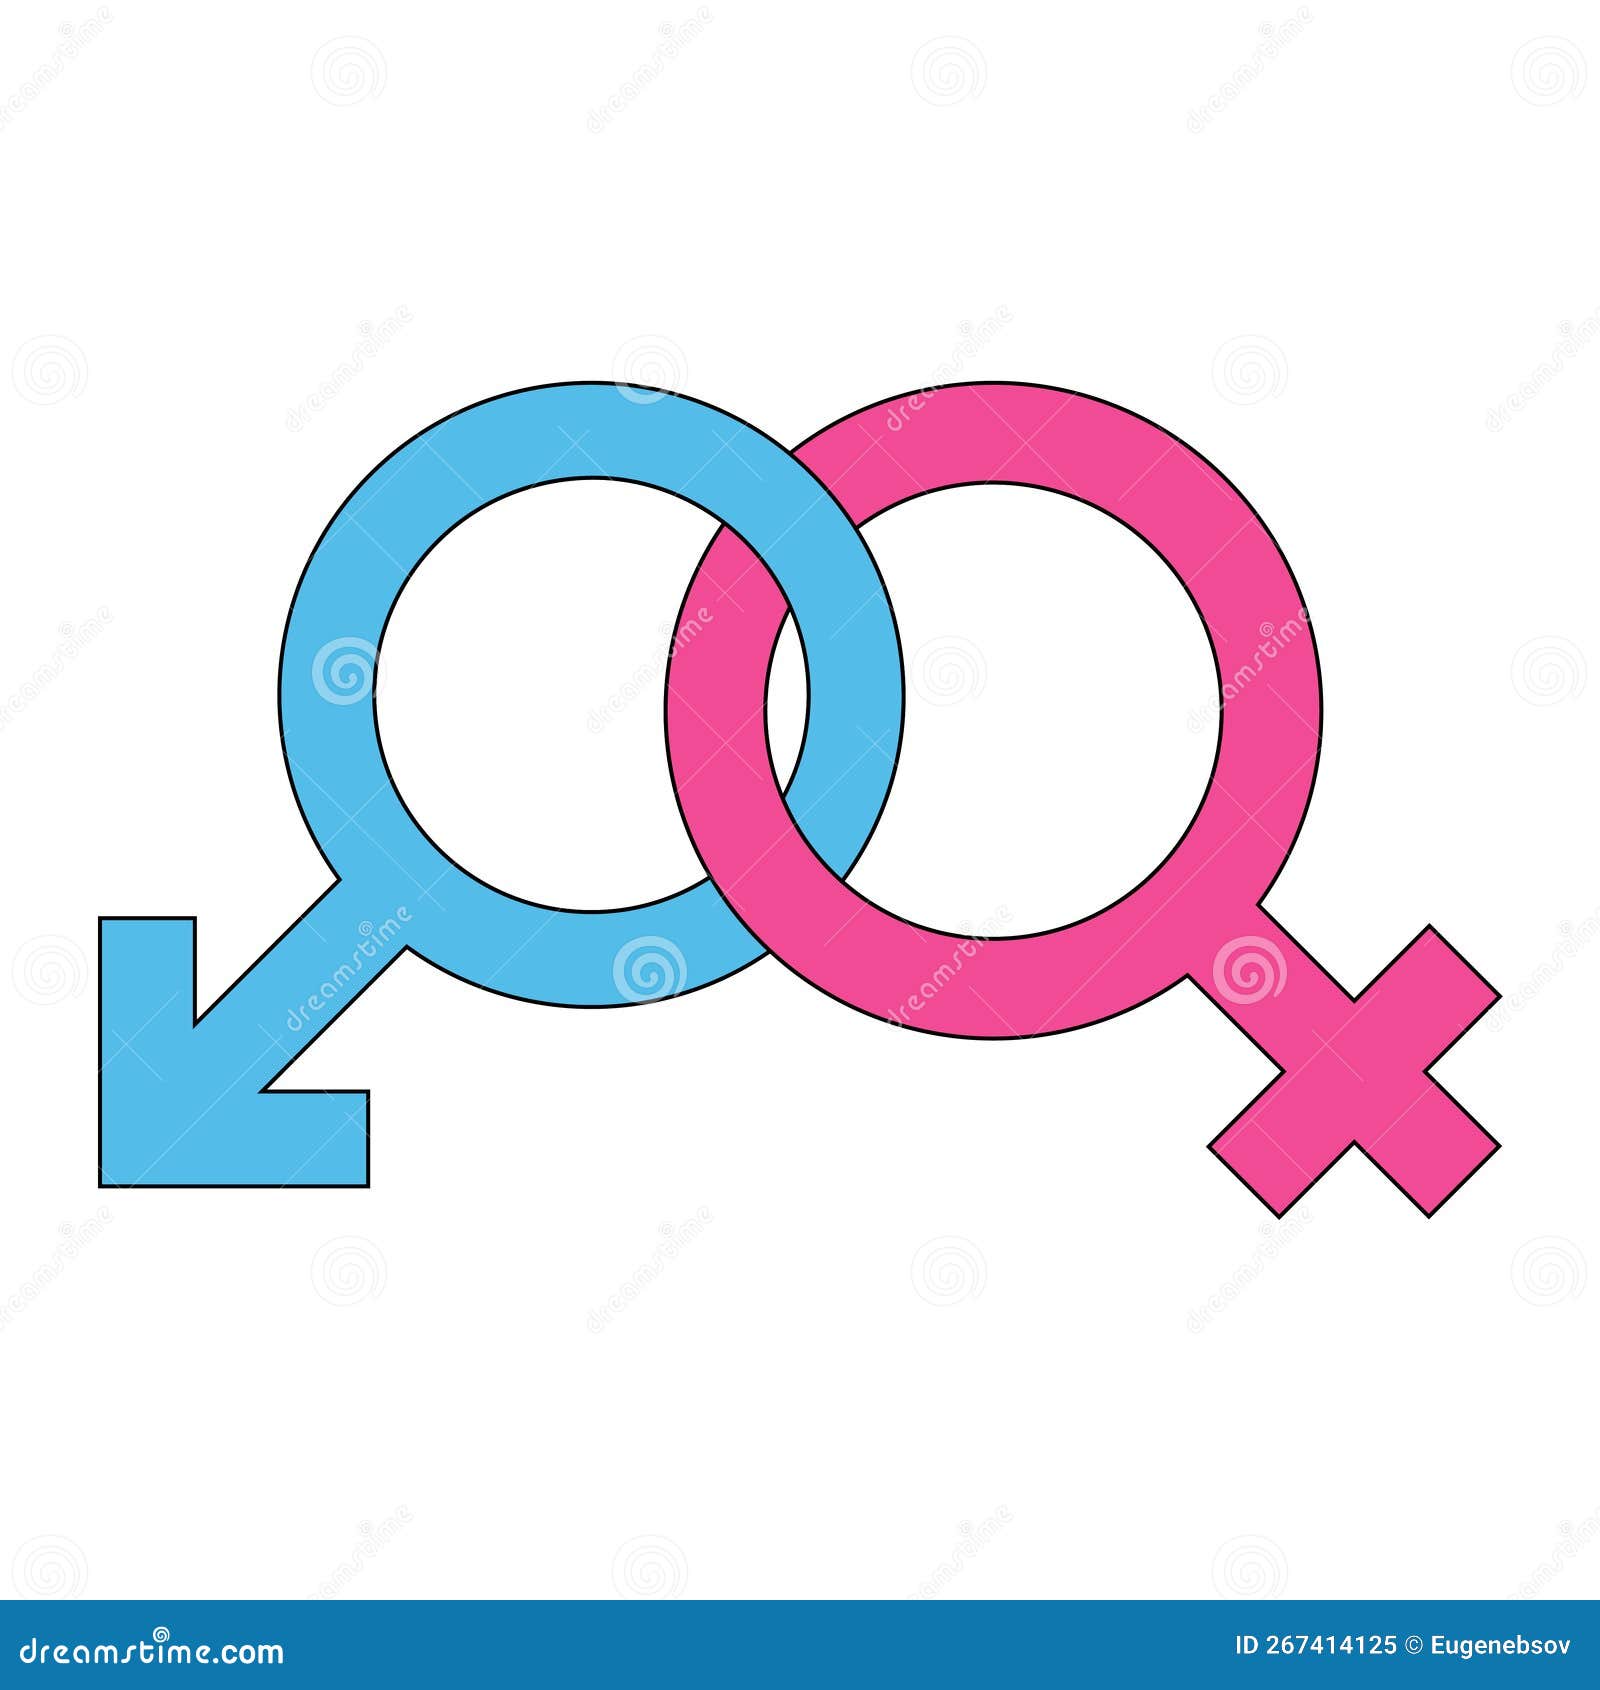 Simple Illustration of Mars and Venus Symbol Concept of Gender Symbols ...